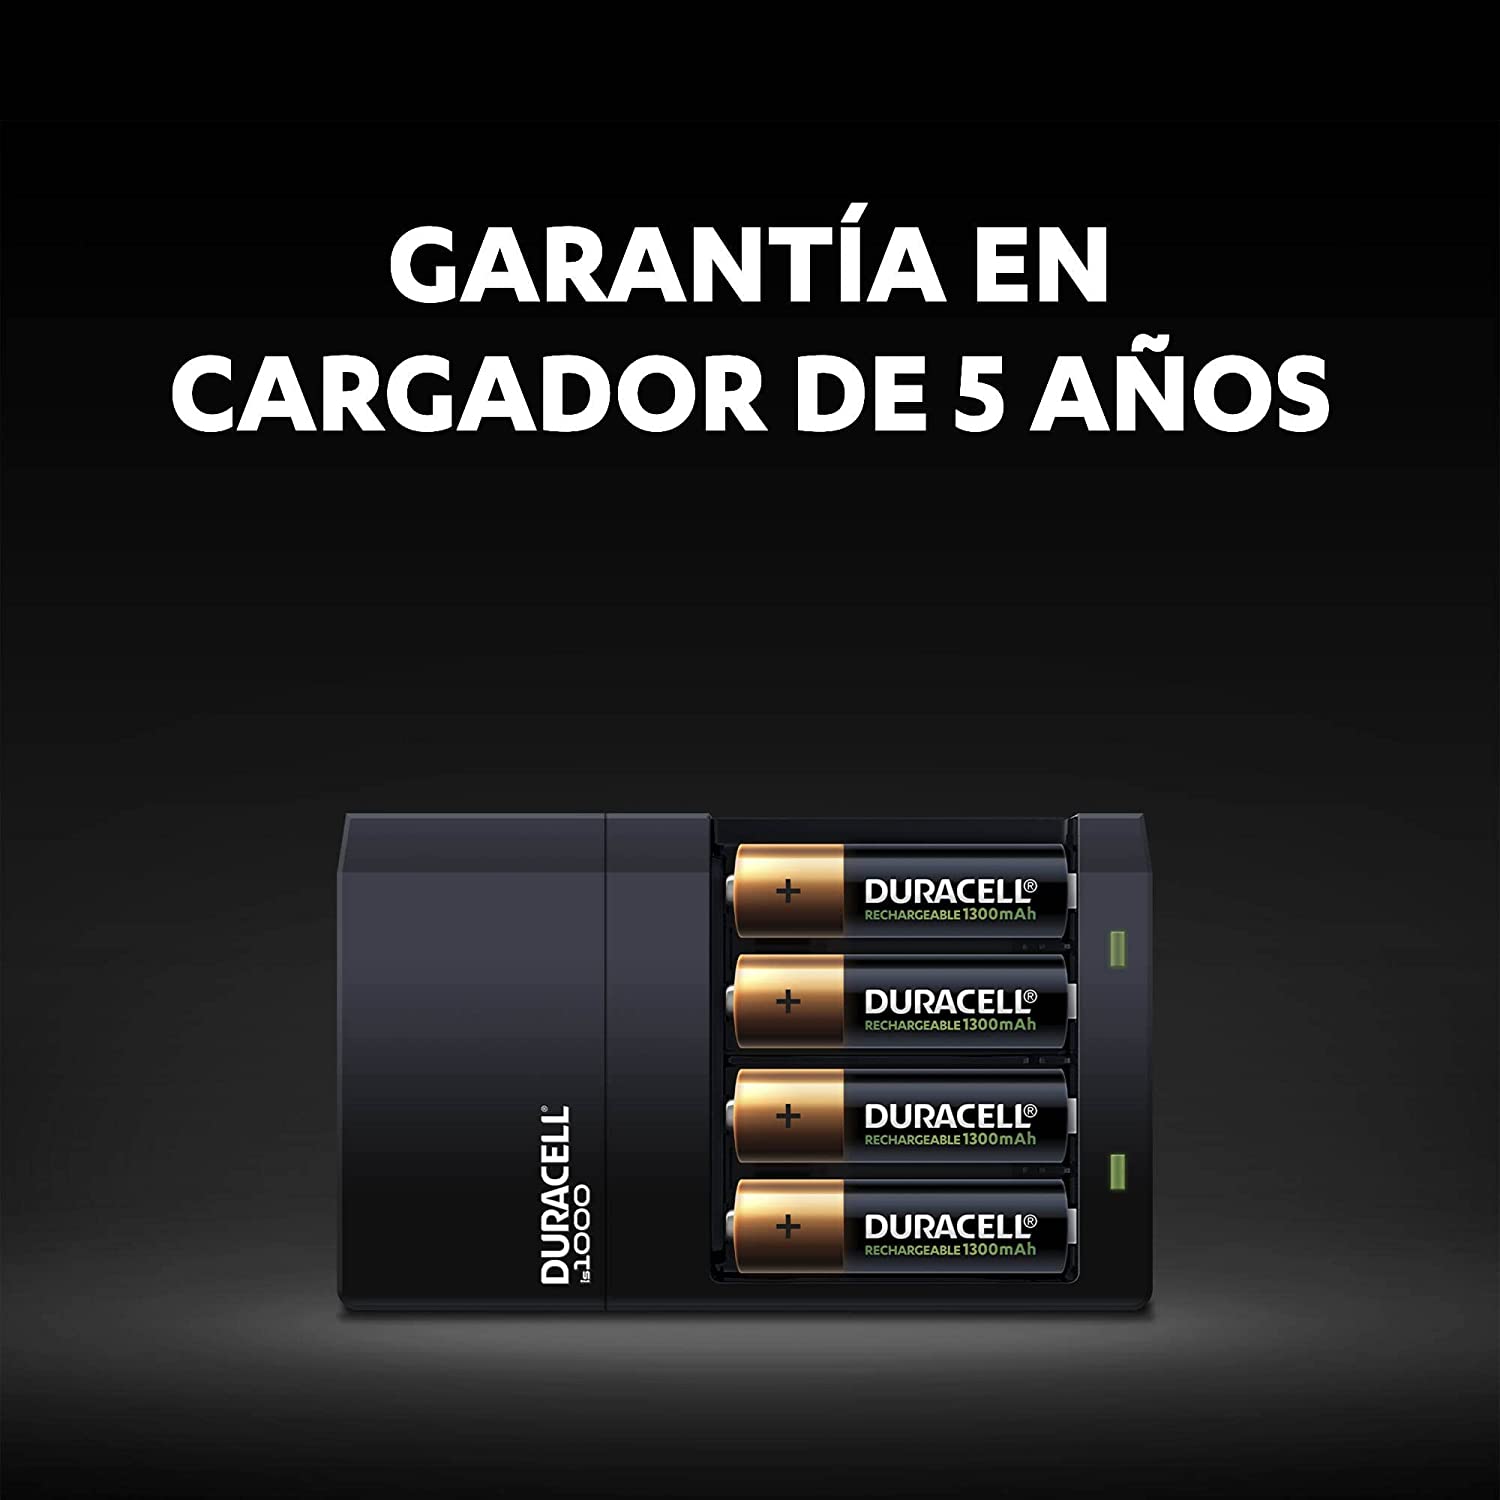 Bateria Recargable Duracell c/Cargador - AA 4pzs + 1 Cargador